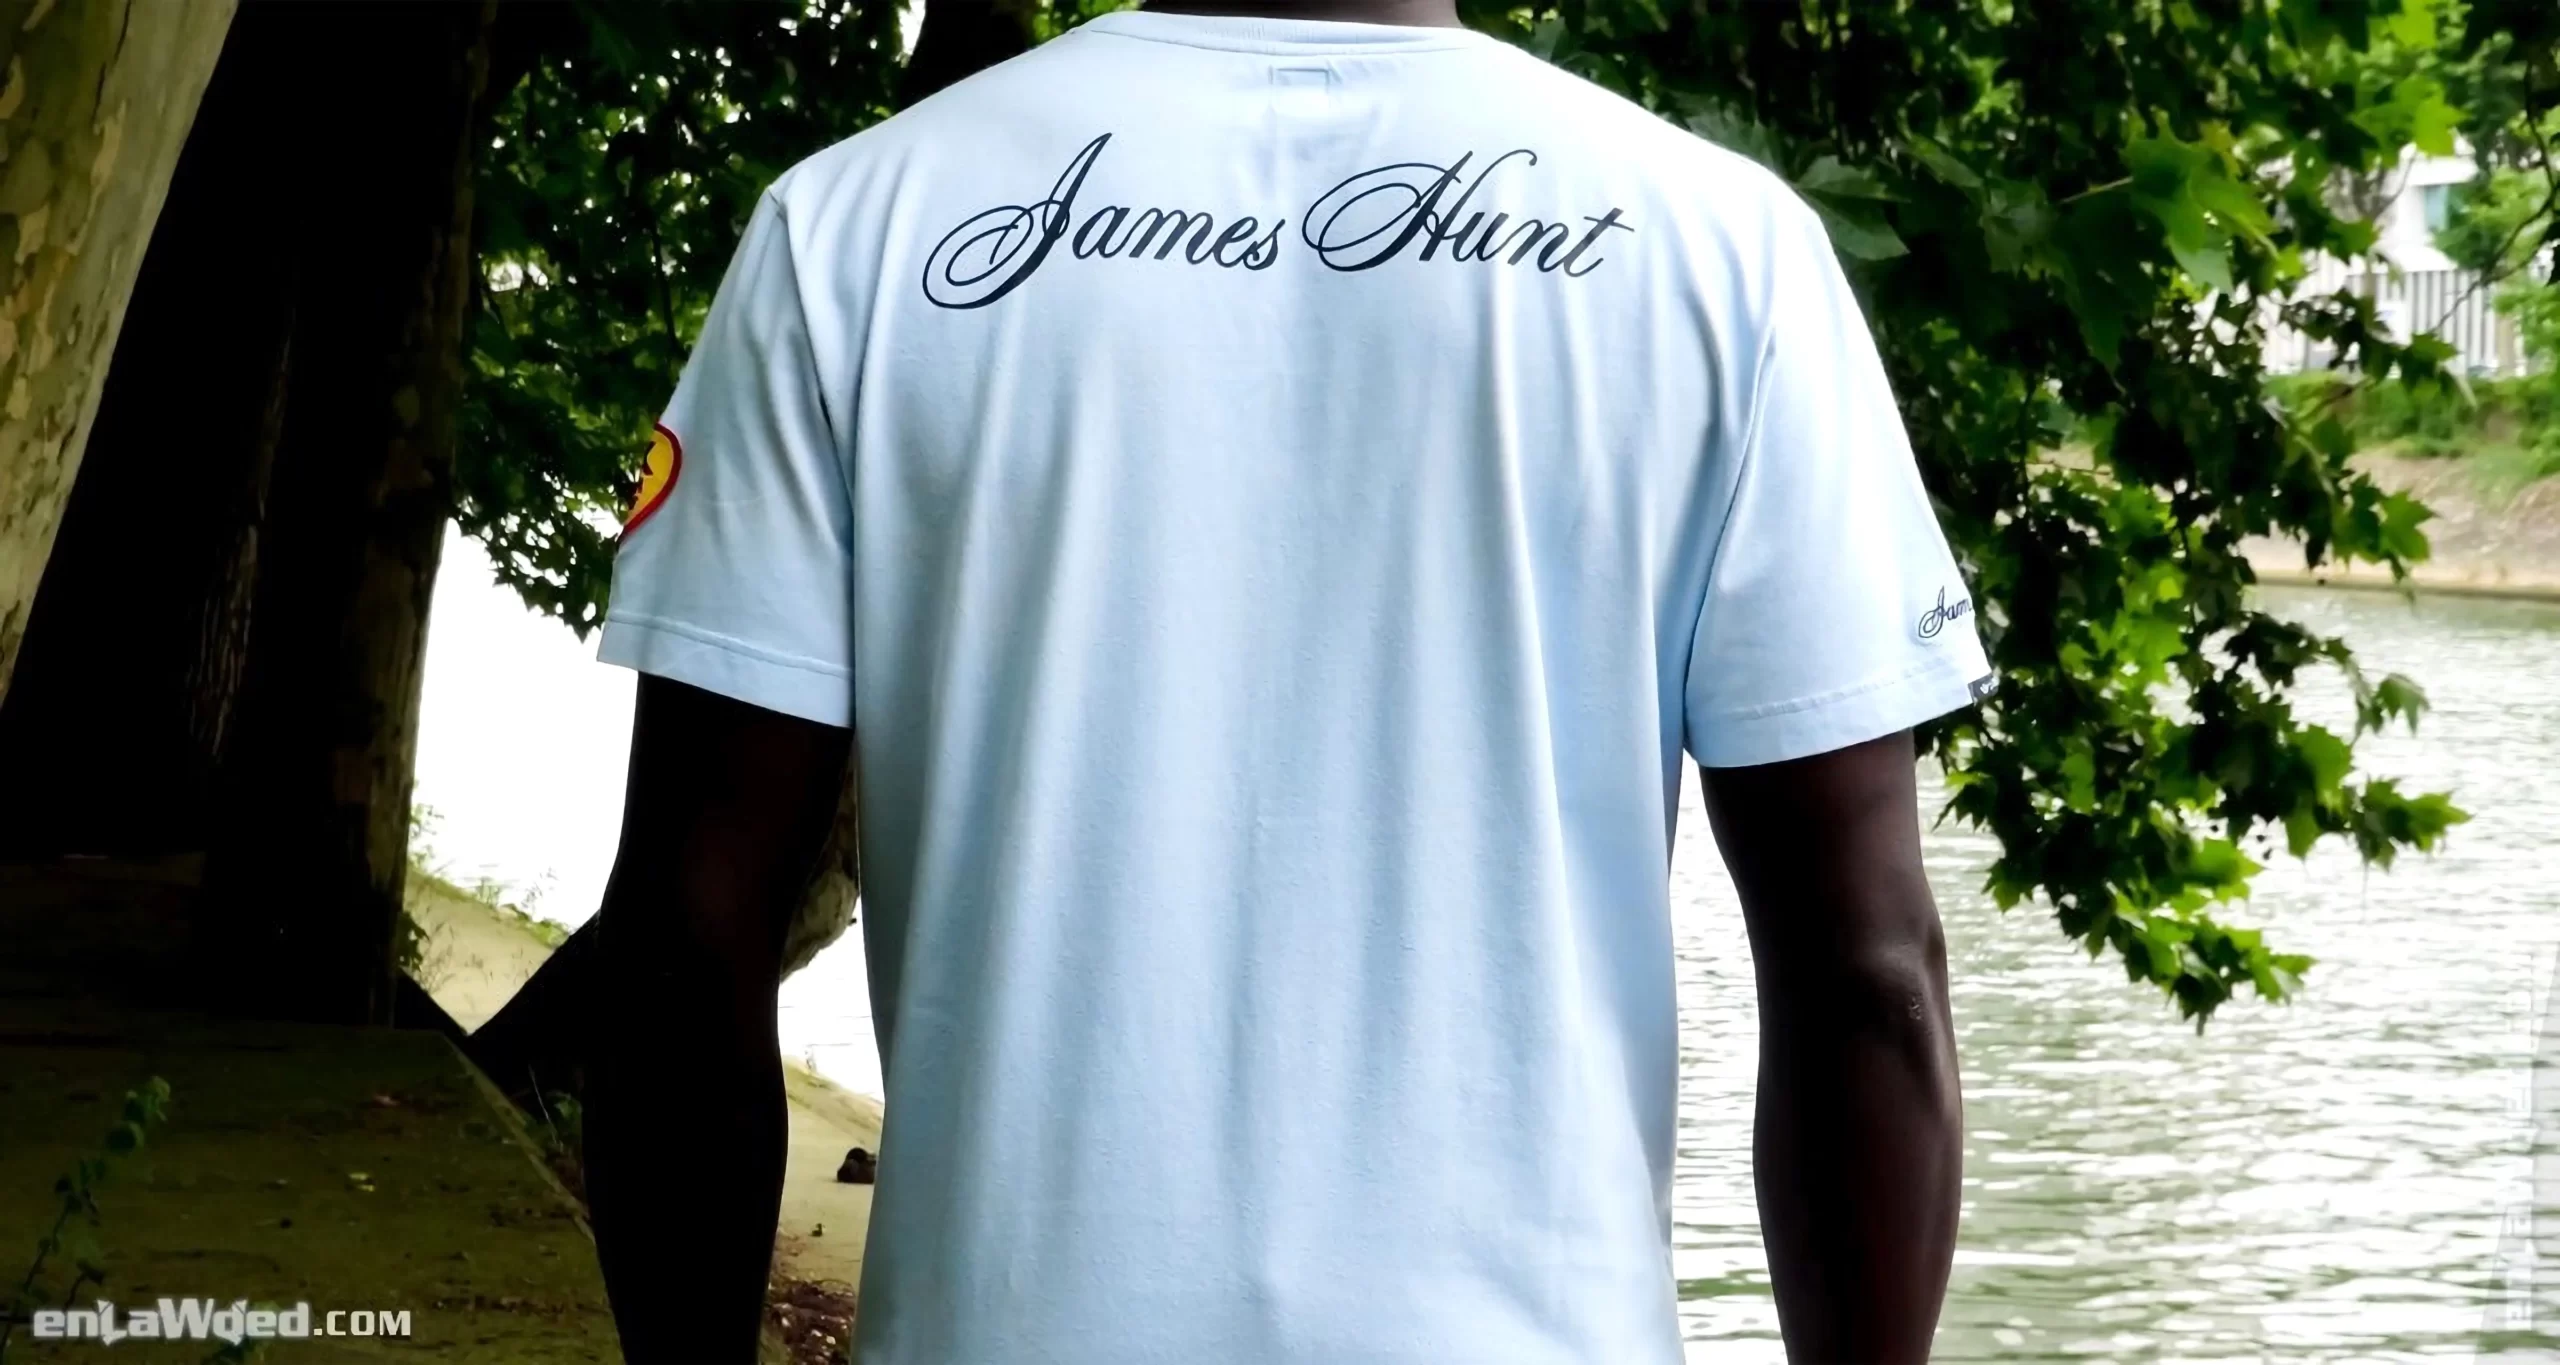 Men’s 2006 James Hunt Player’s Club T-Shirt by Adidas: Frisky (EnLawded.com file #lmchk90316ip2y125021kg9st)